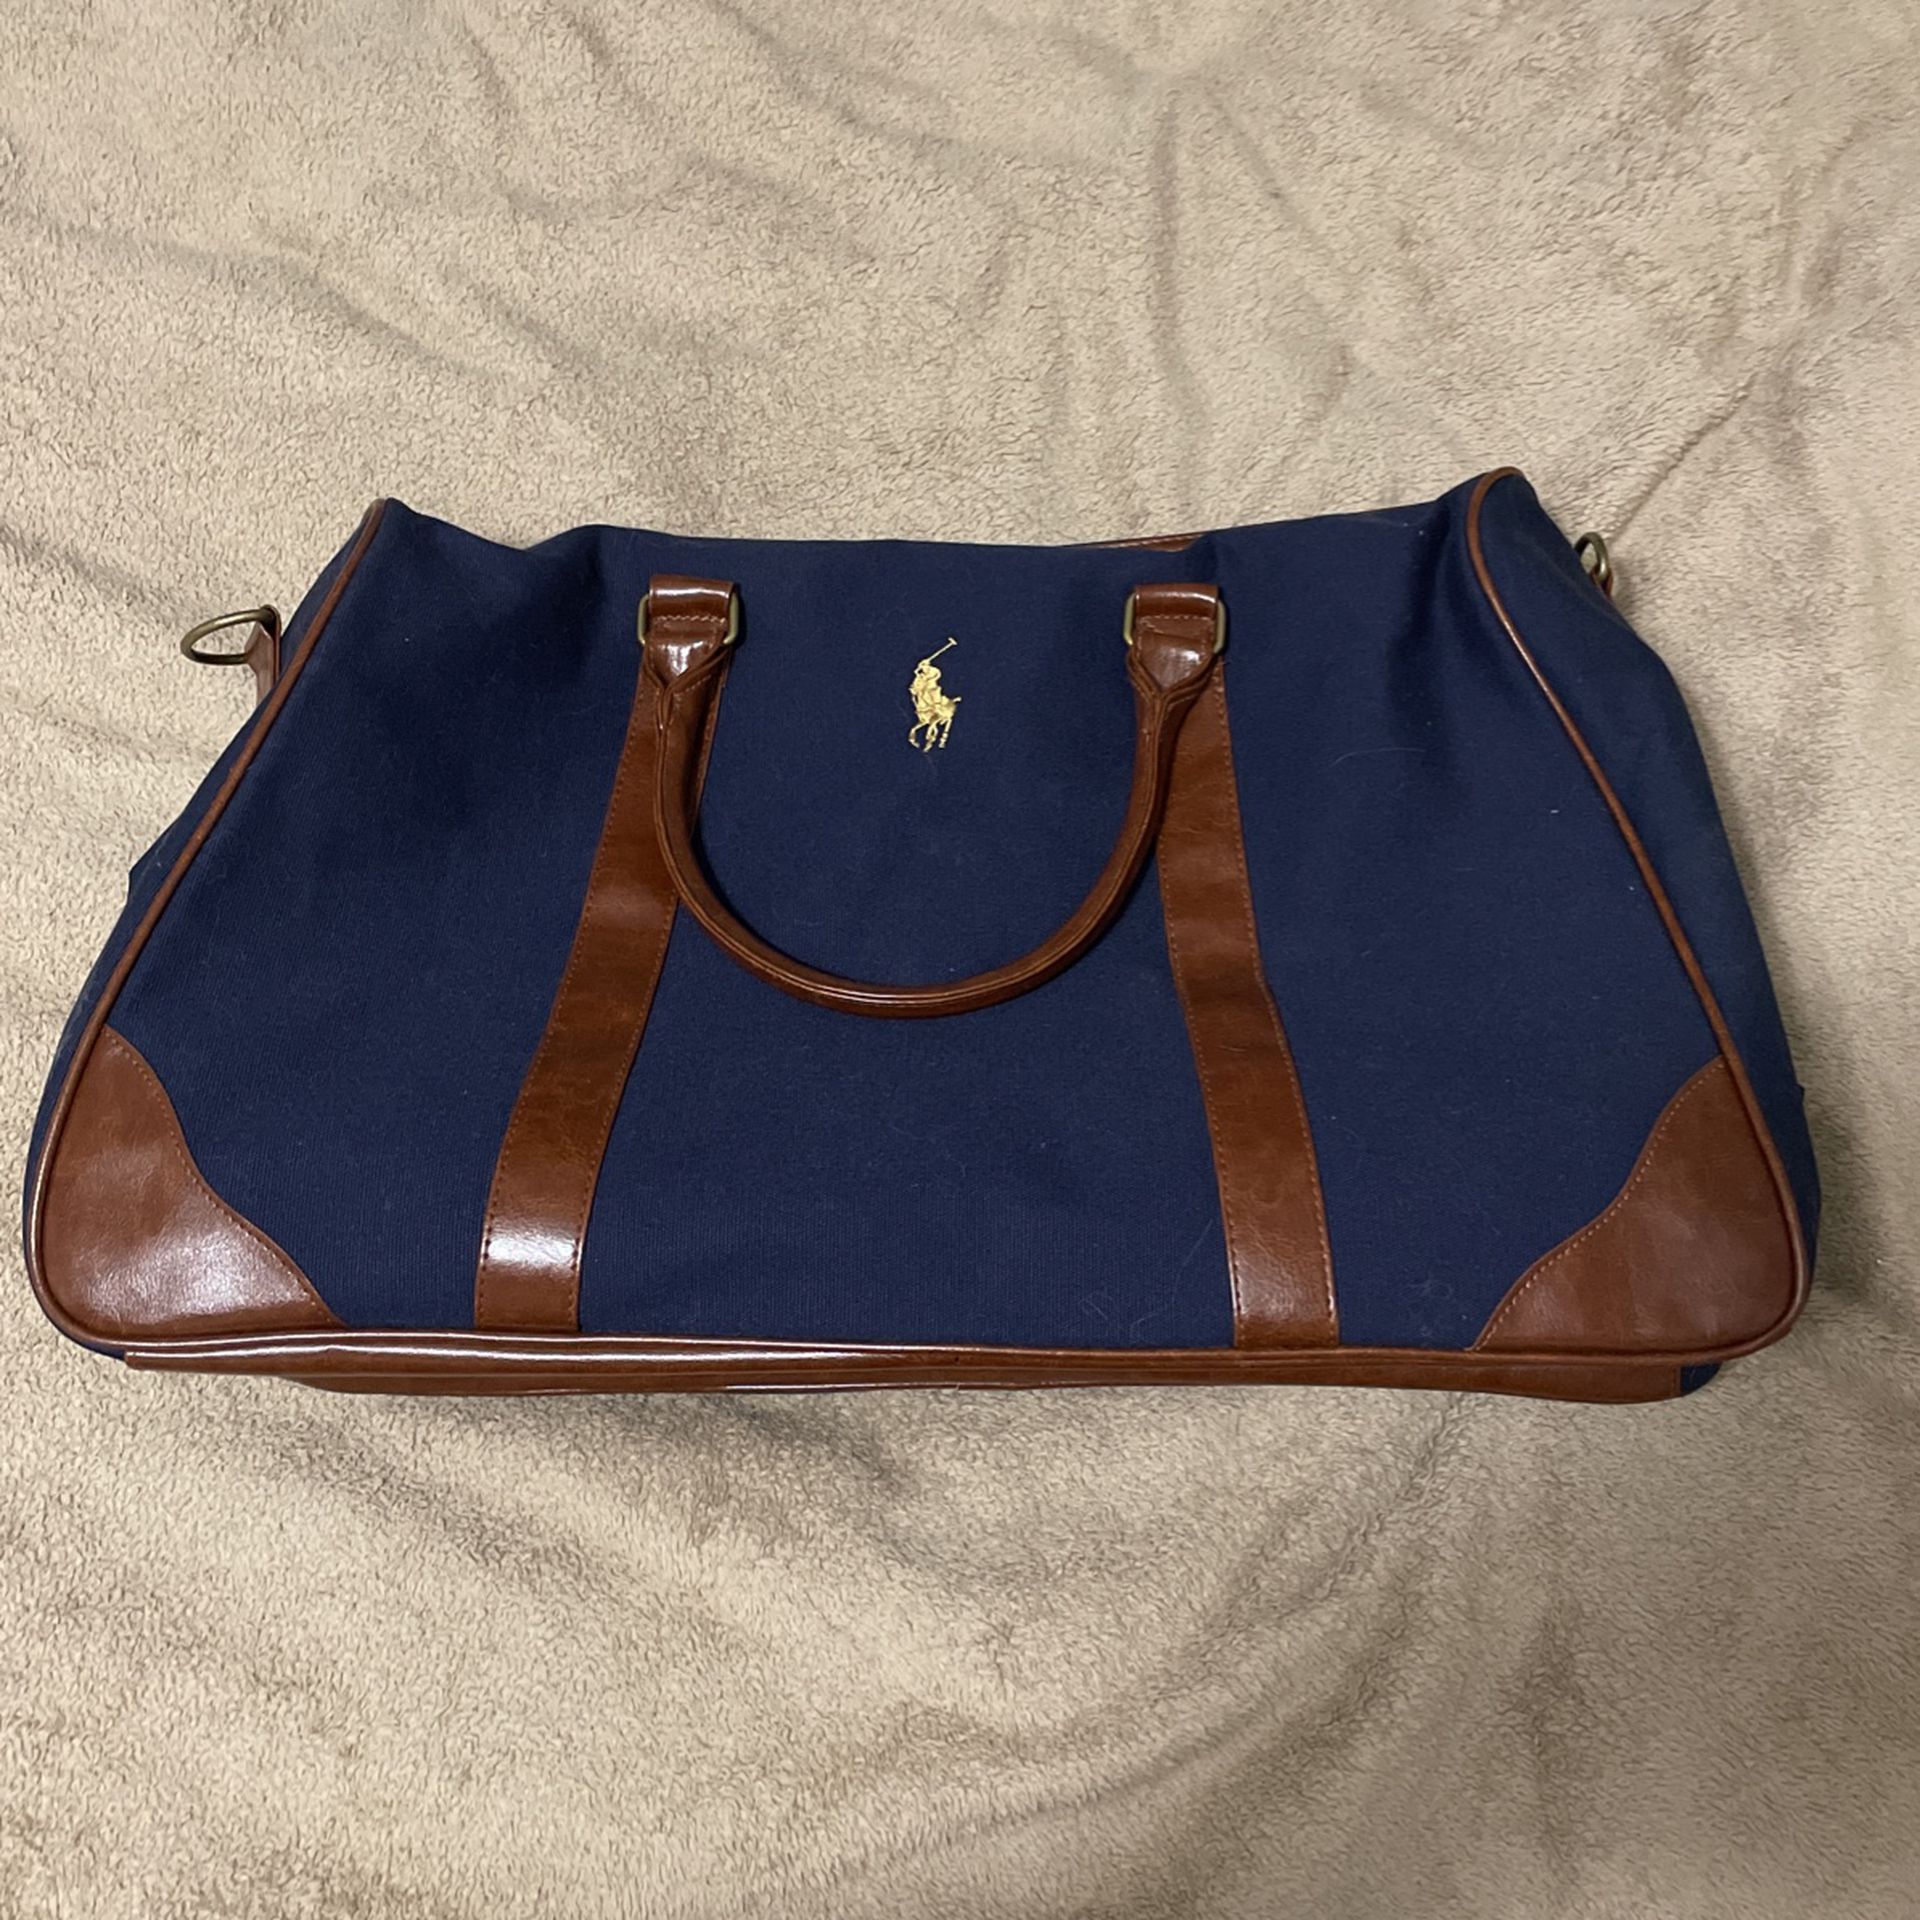 Ralph Lauren/polo Large Bag